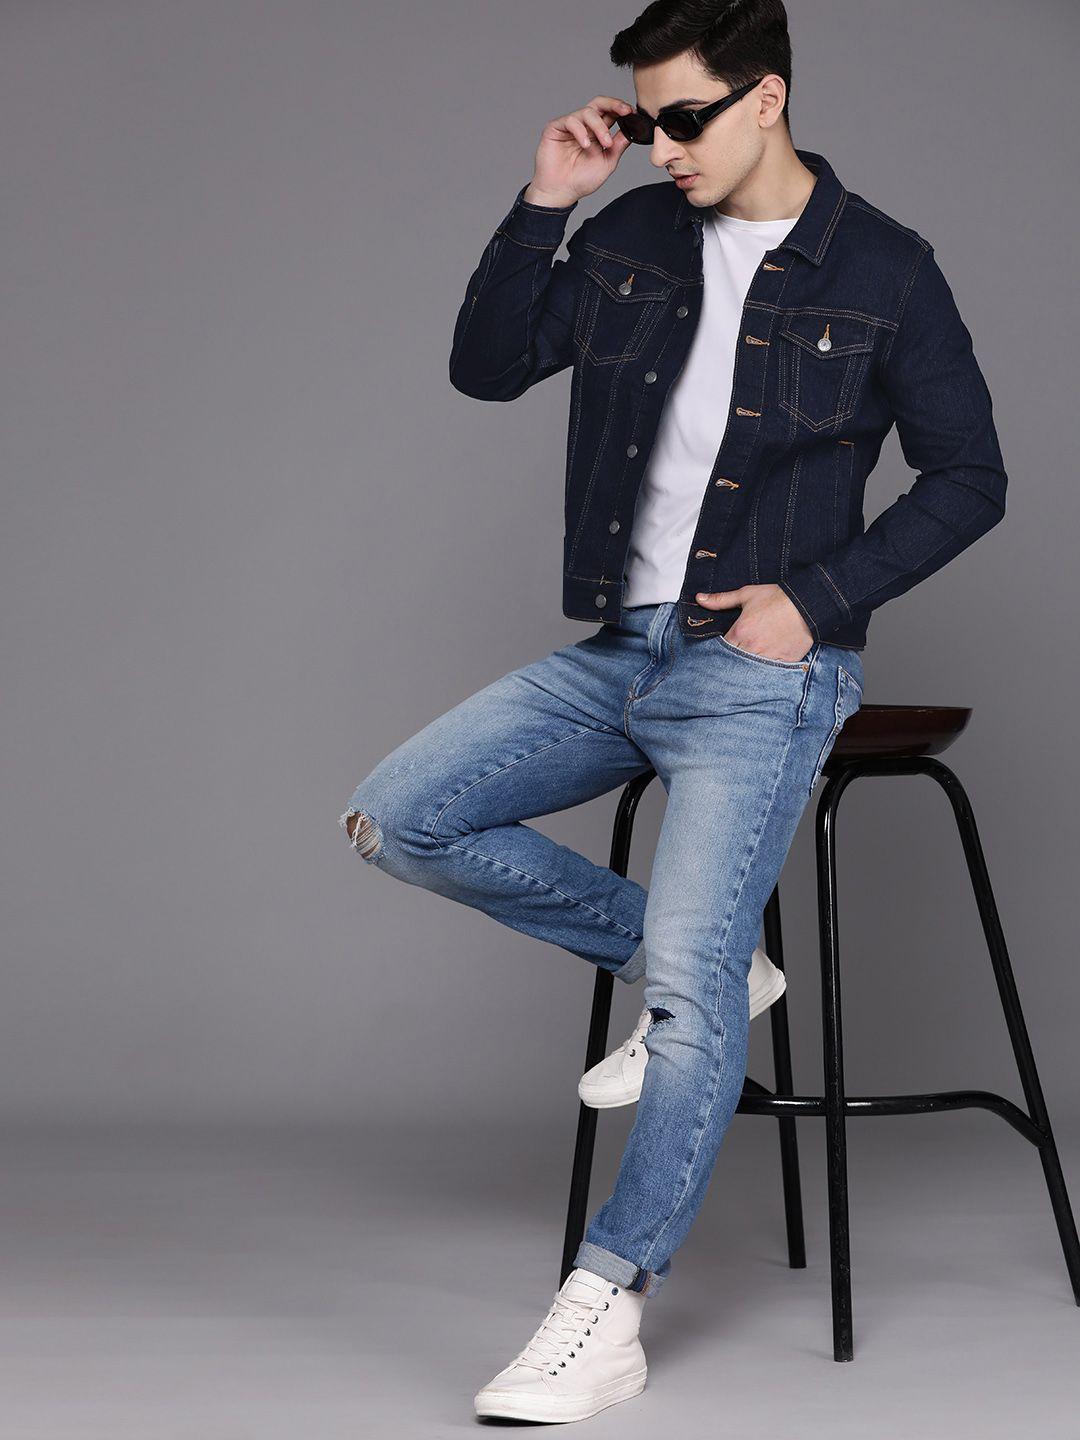 louis philippe jeans solid denim jacket